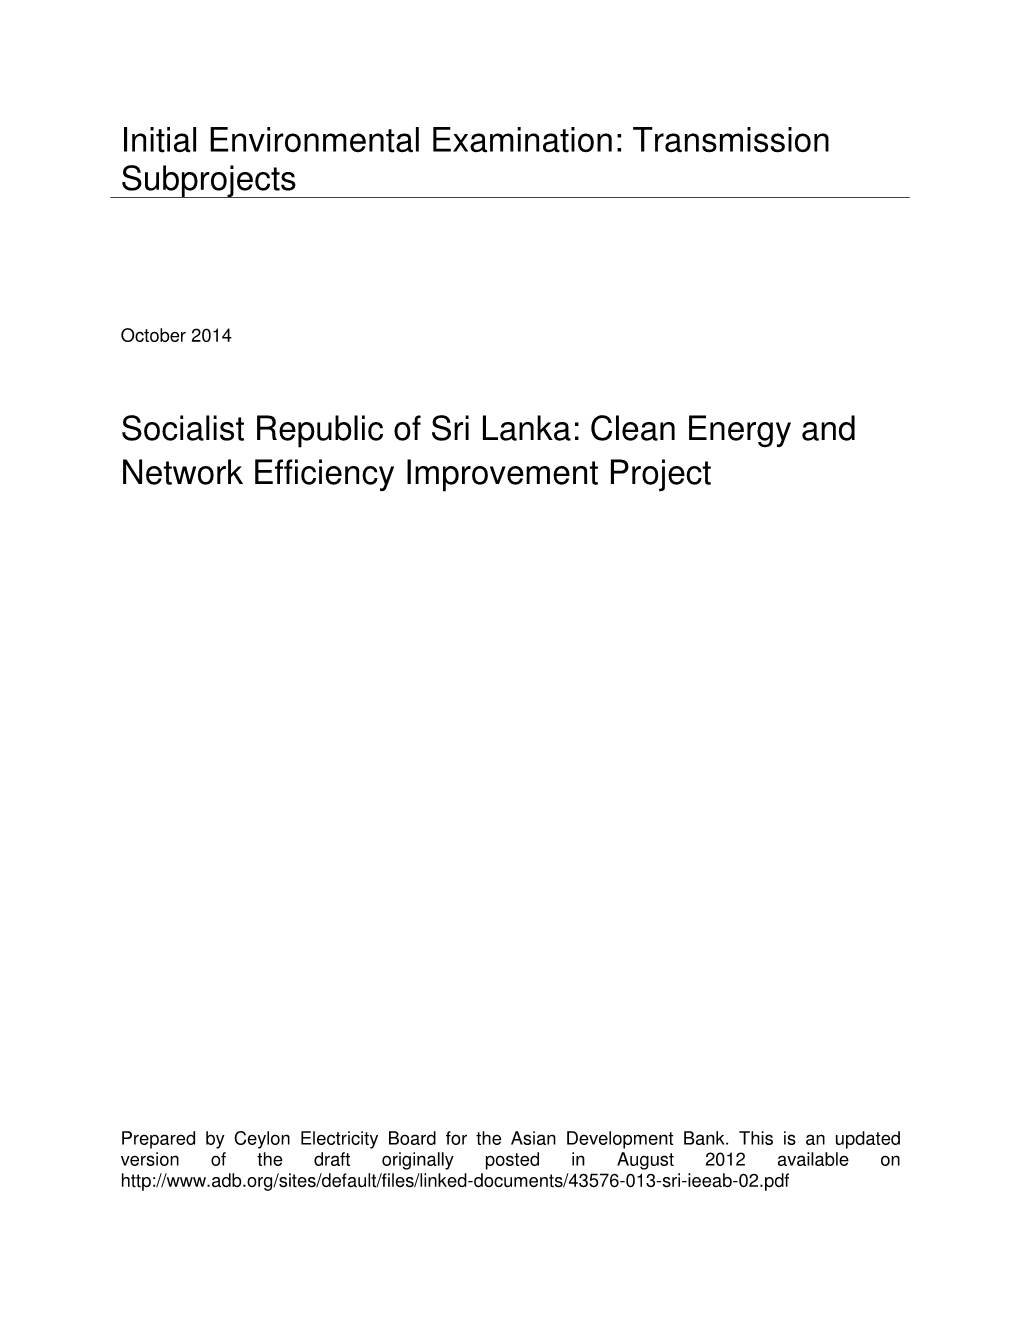 Socialist Republic of Sri Lanka: Clean Energy and Network Efficiency Improvement Project